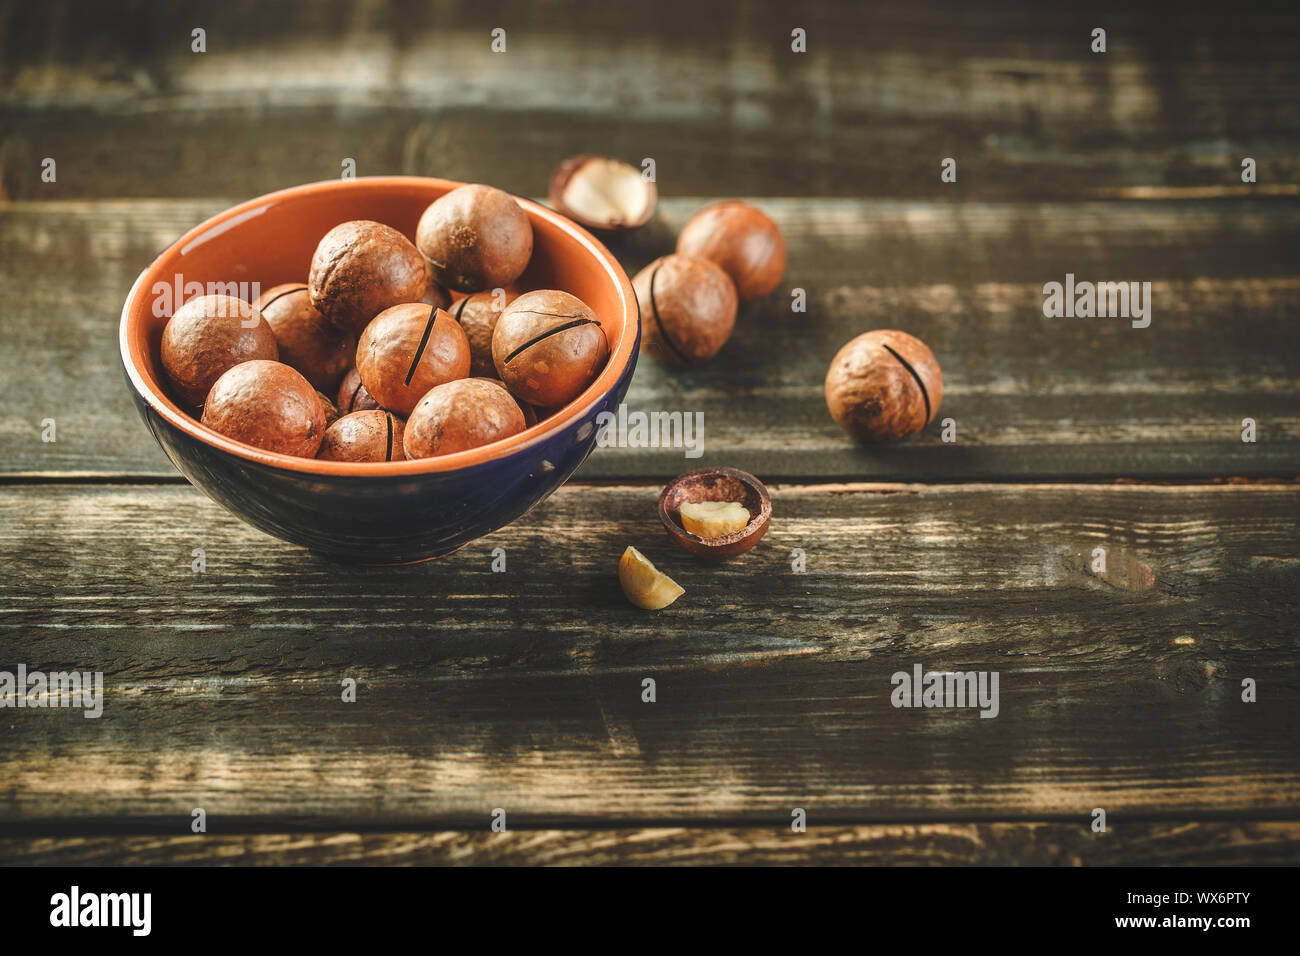 Macadamia nuts on wooden table Stock Photo